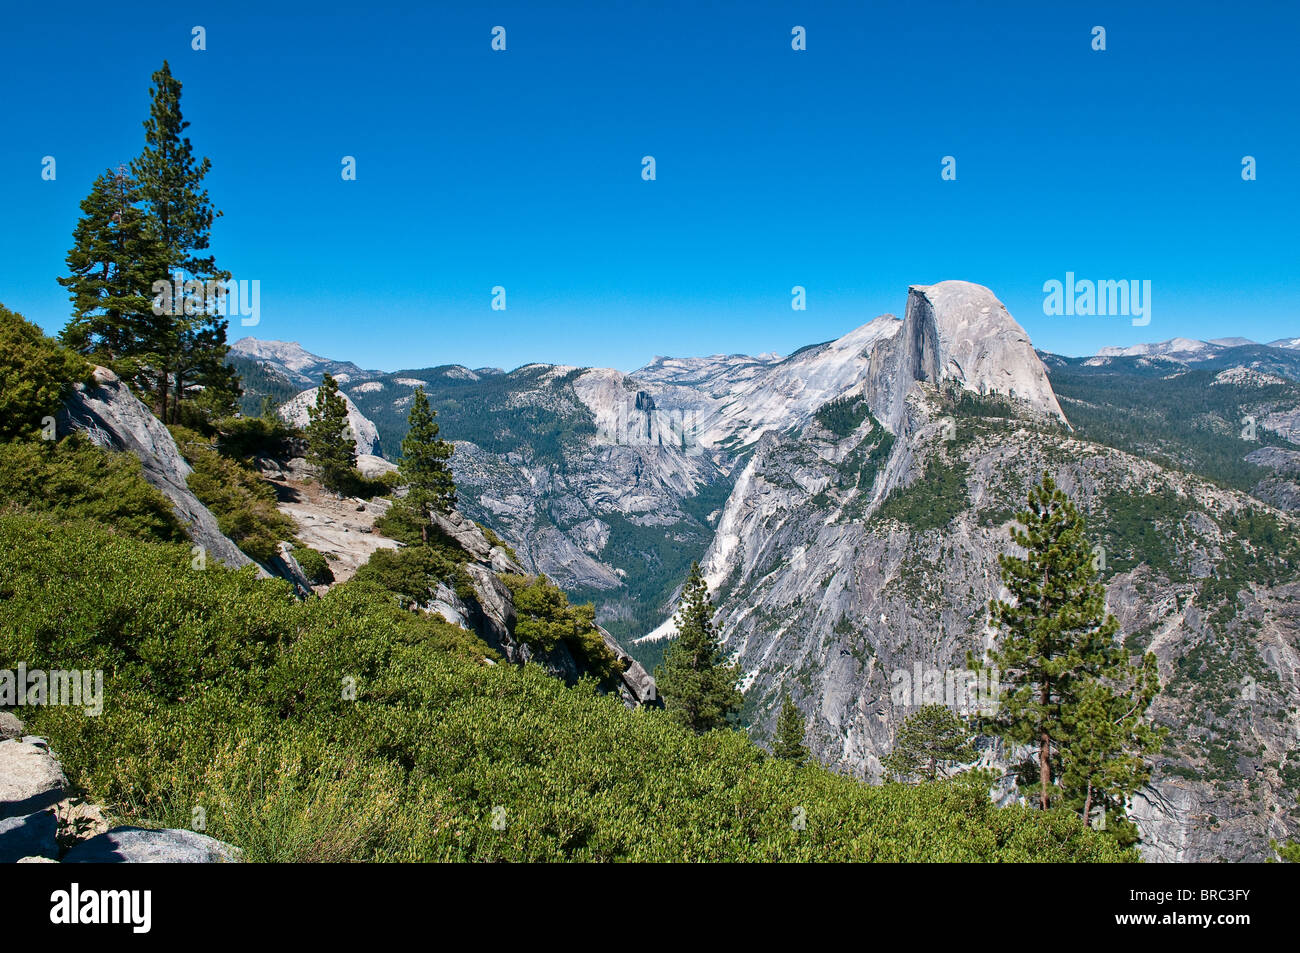 Half Dome Mountain seen from Glacier Point, Yosemite National Park, California, USA Stock Photo